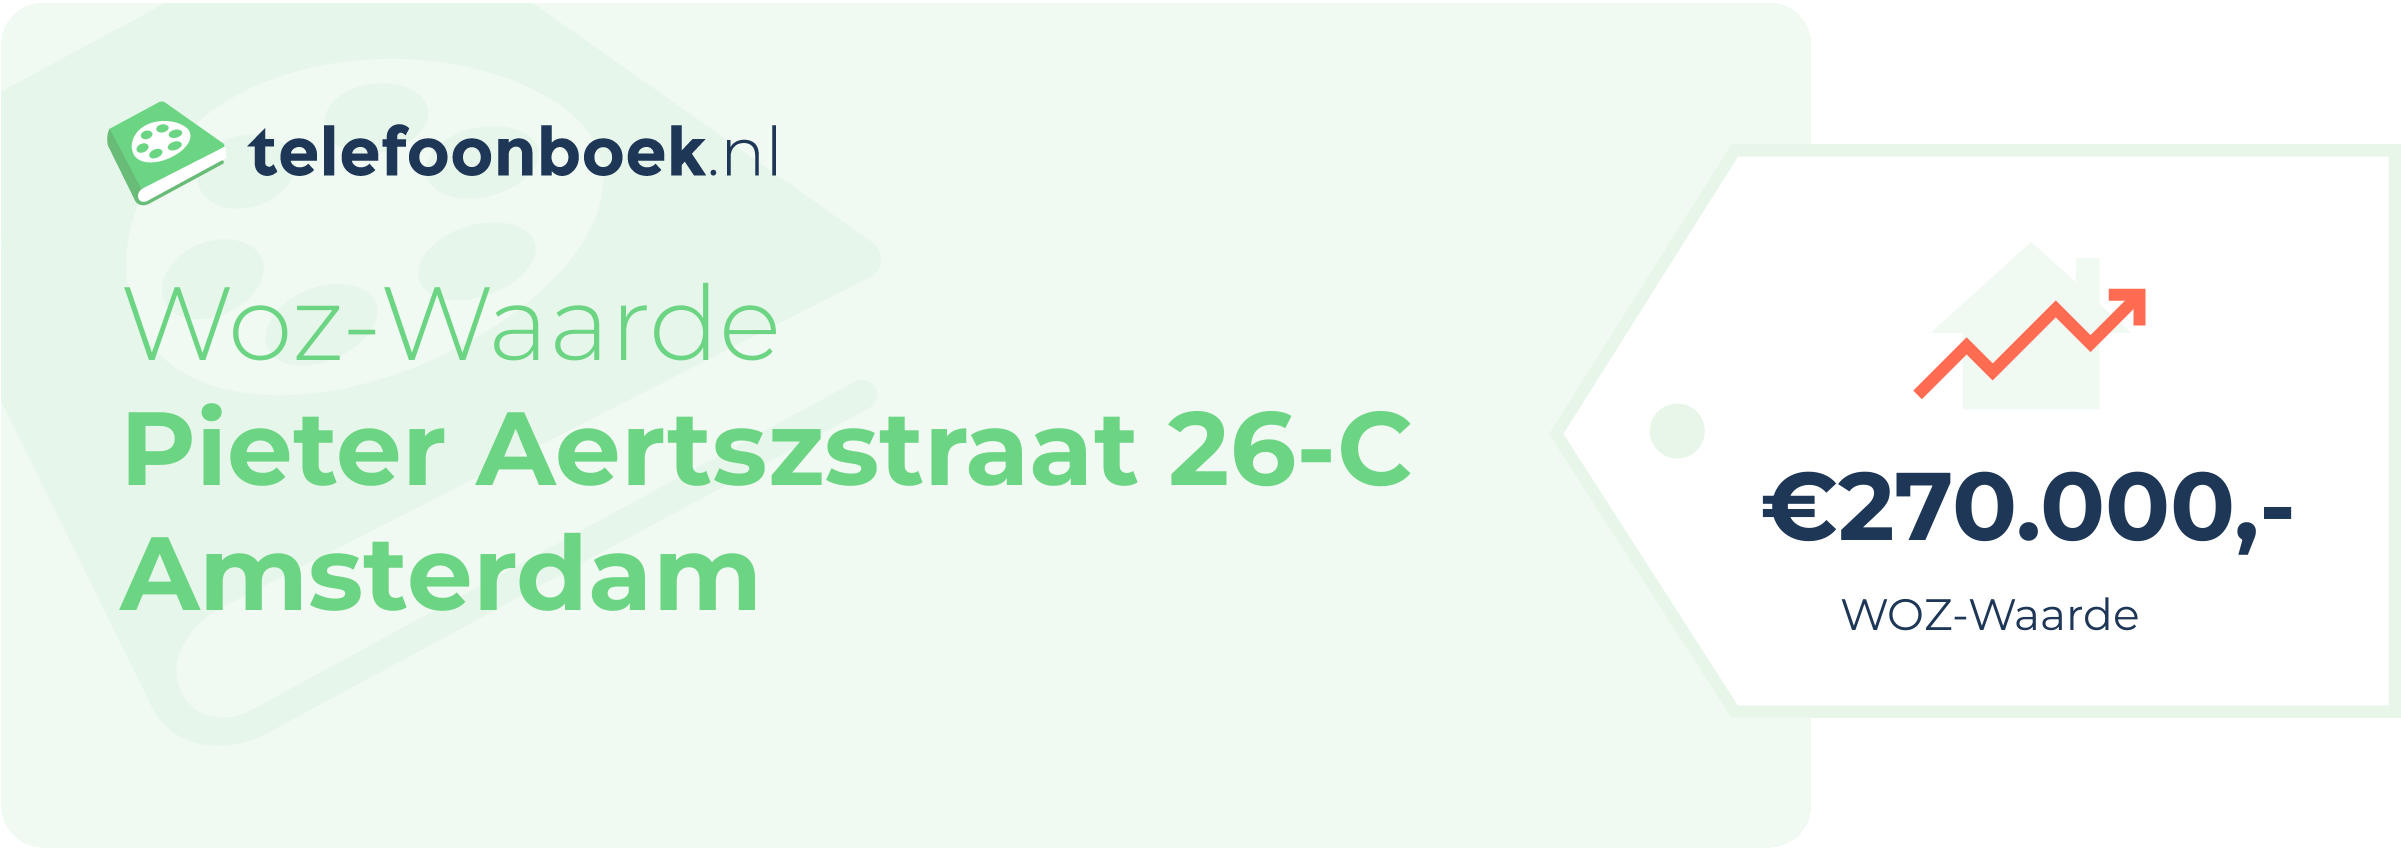 WOZ-waarde Pieter Aertszstraat 26-C Amsterdam